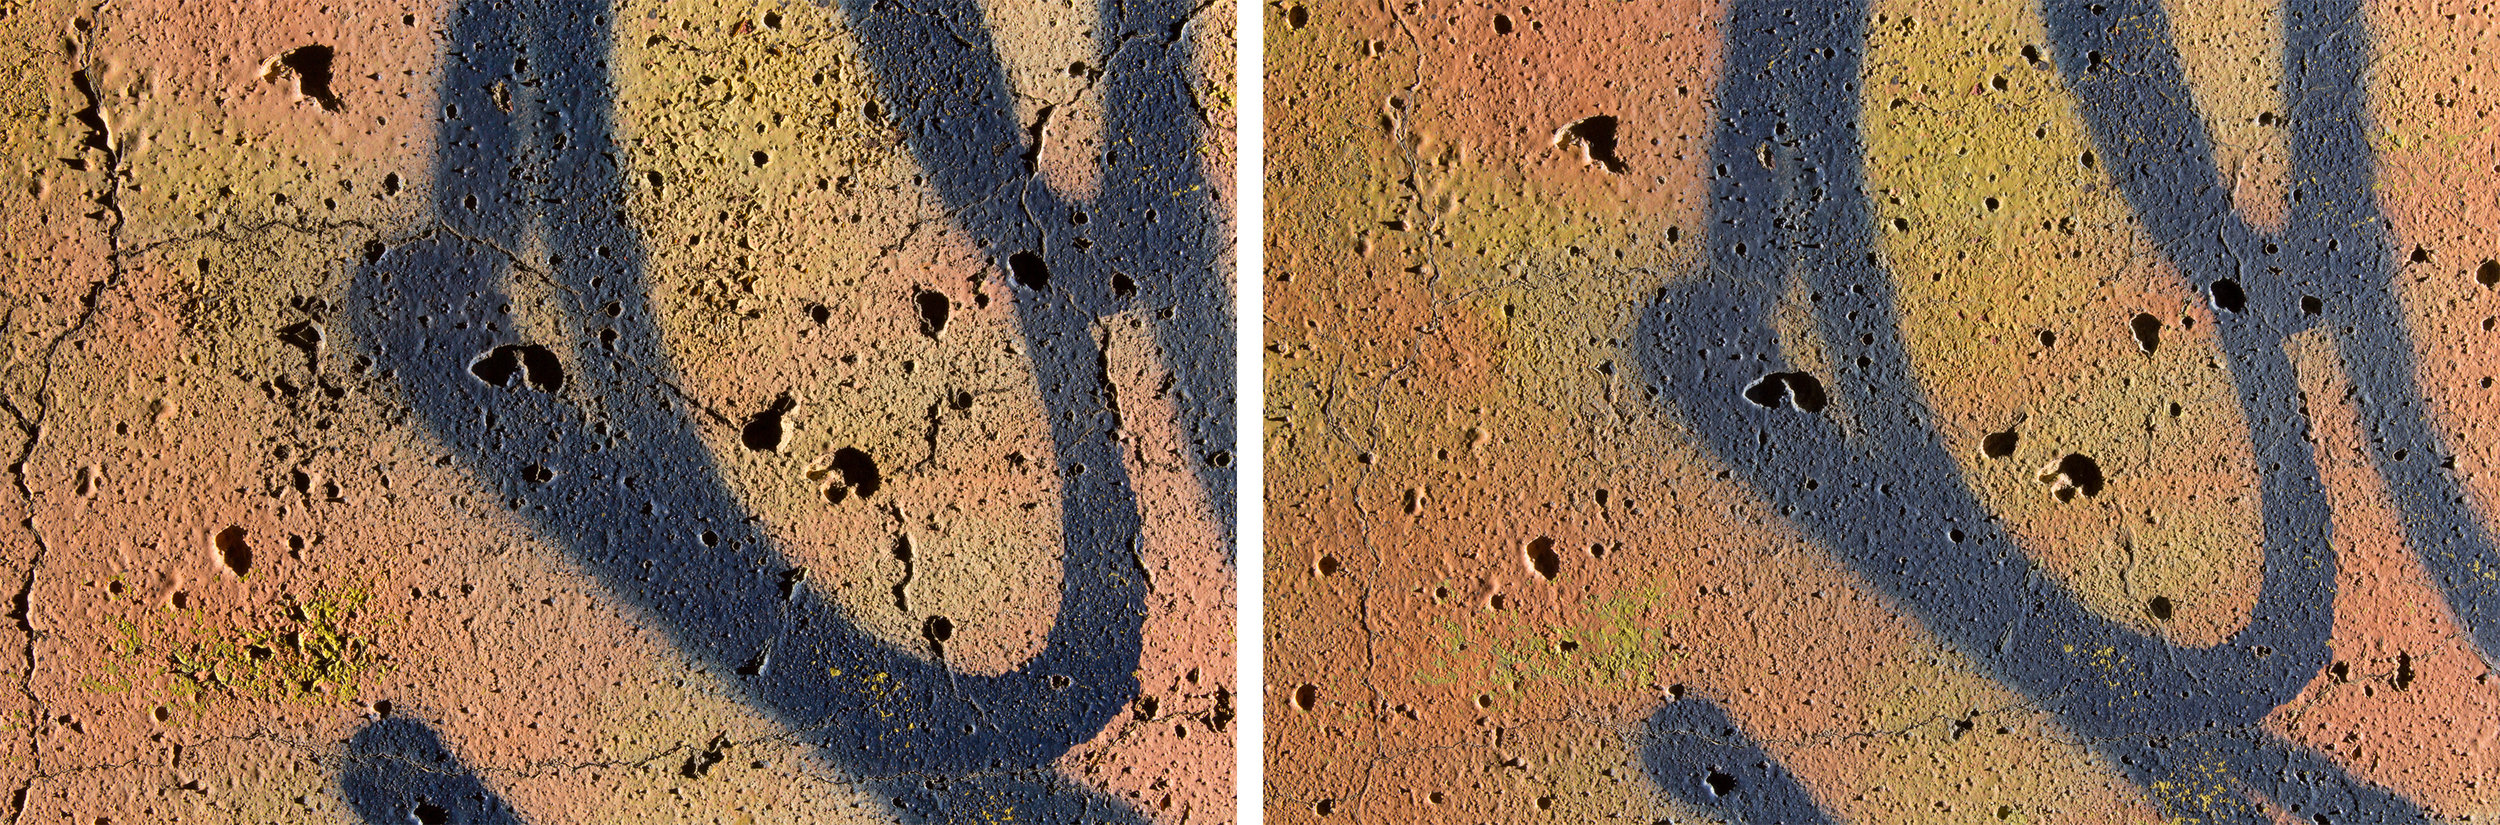  Results of readhesion shown in raking light. Before (left), After (right).&nbsp;    
  
 
  
    
  
 Normal 
 0 
 
 
 
 
 false 
 false 
 false 
 
 EN-US 
 JA 
 X-NONE 
 
  
  
  
  
  
  
  
  
  
  
 
 
  
  
  
  
  
  
  
  
  
  
  
  
    
  